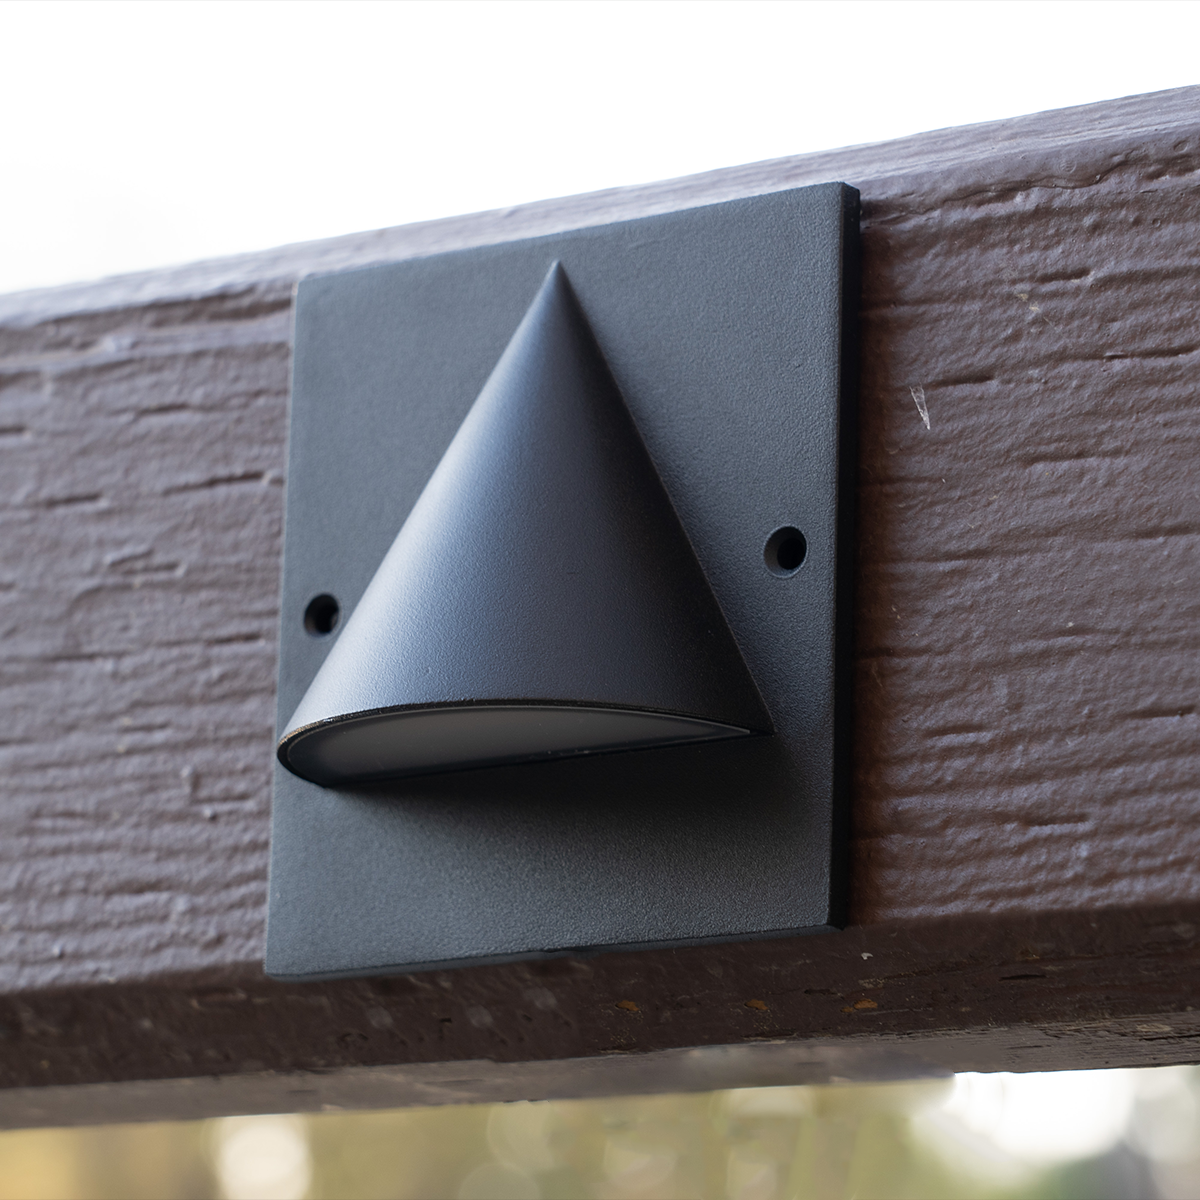 LeonLite® Vertebre Deck & Rail Light - Matte Black - Adjustable Color Temperature